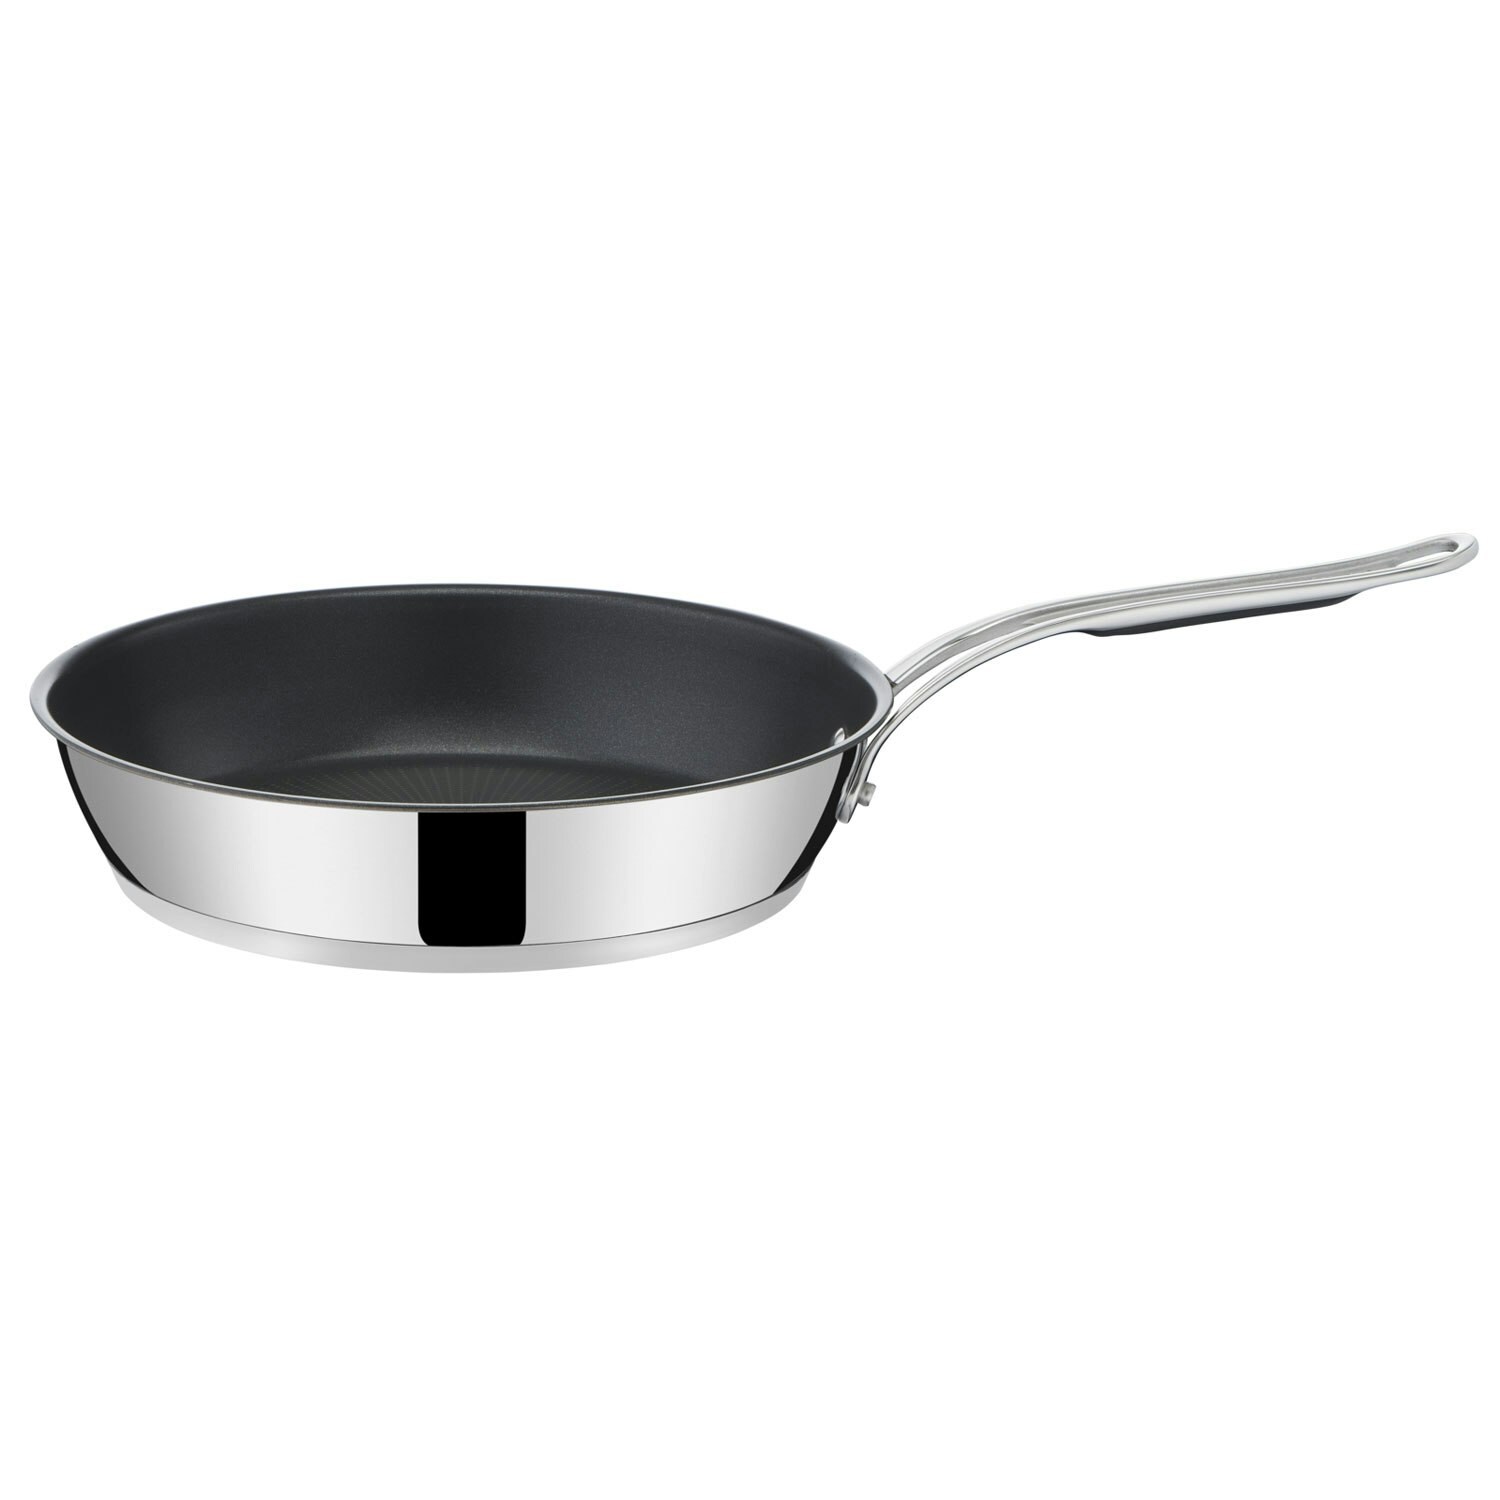 https://royaldesign.com/image/2/tefal-jamie-oliver-cooks-classic-frying-pans-set-28-cm-20-cm-1